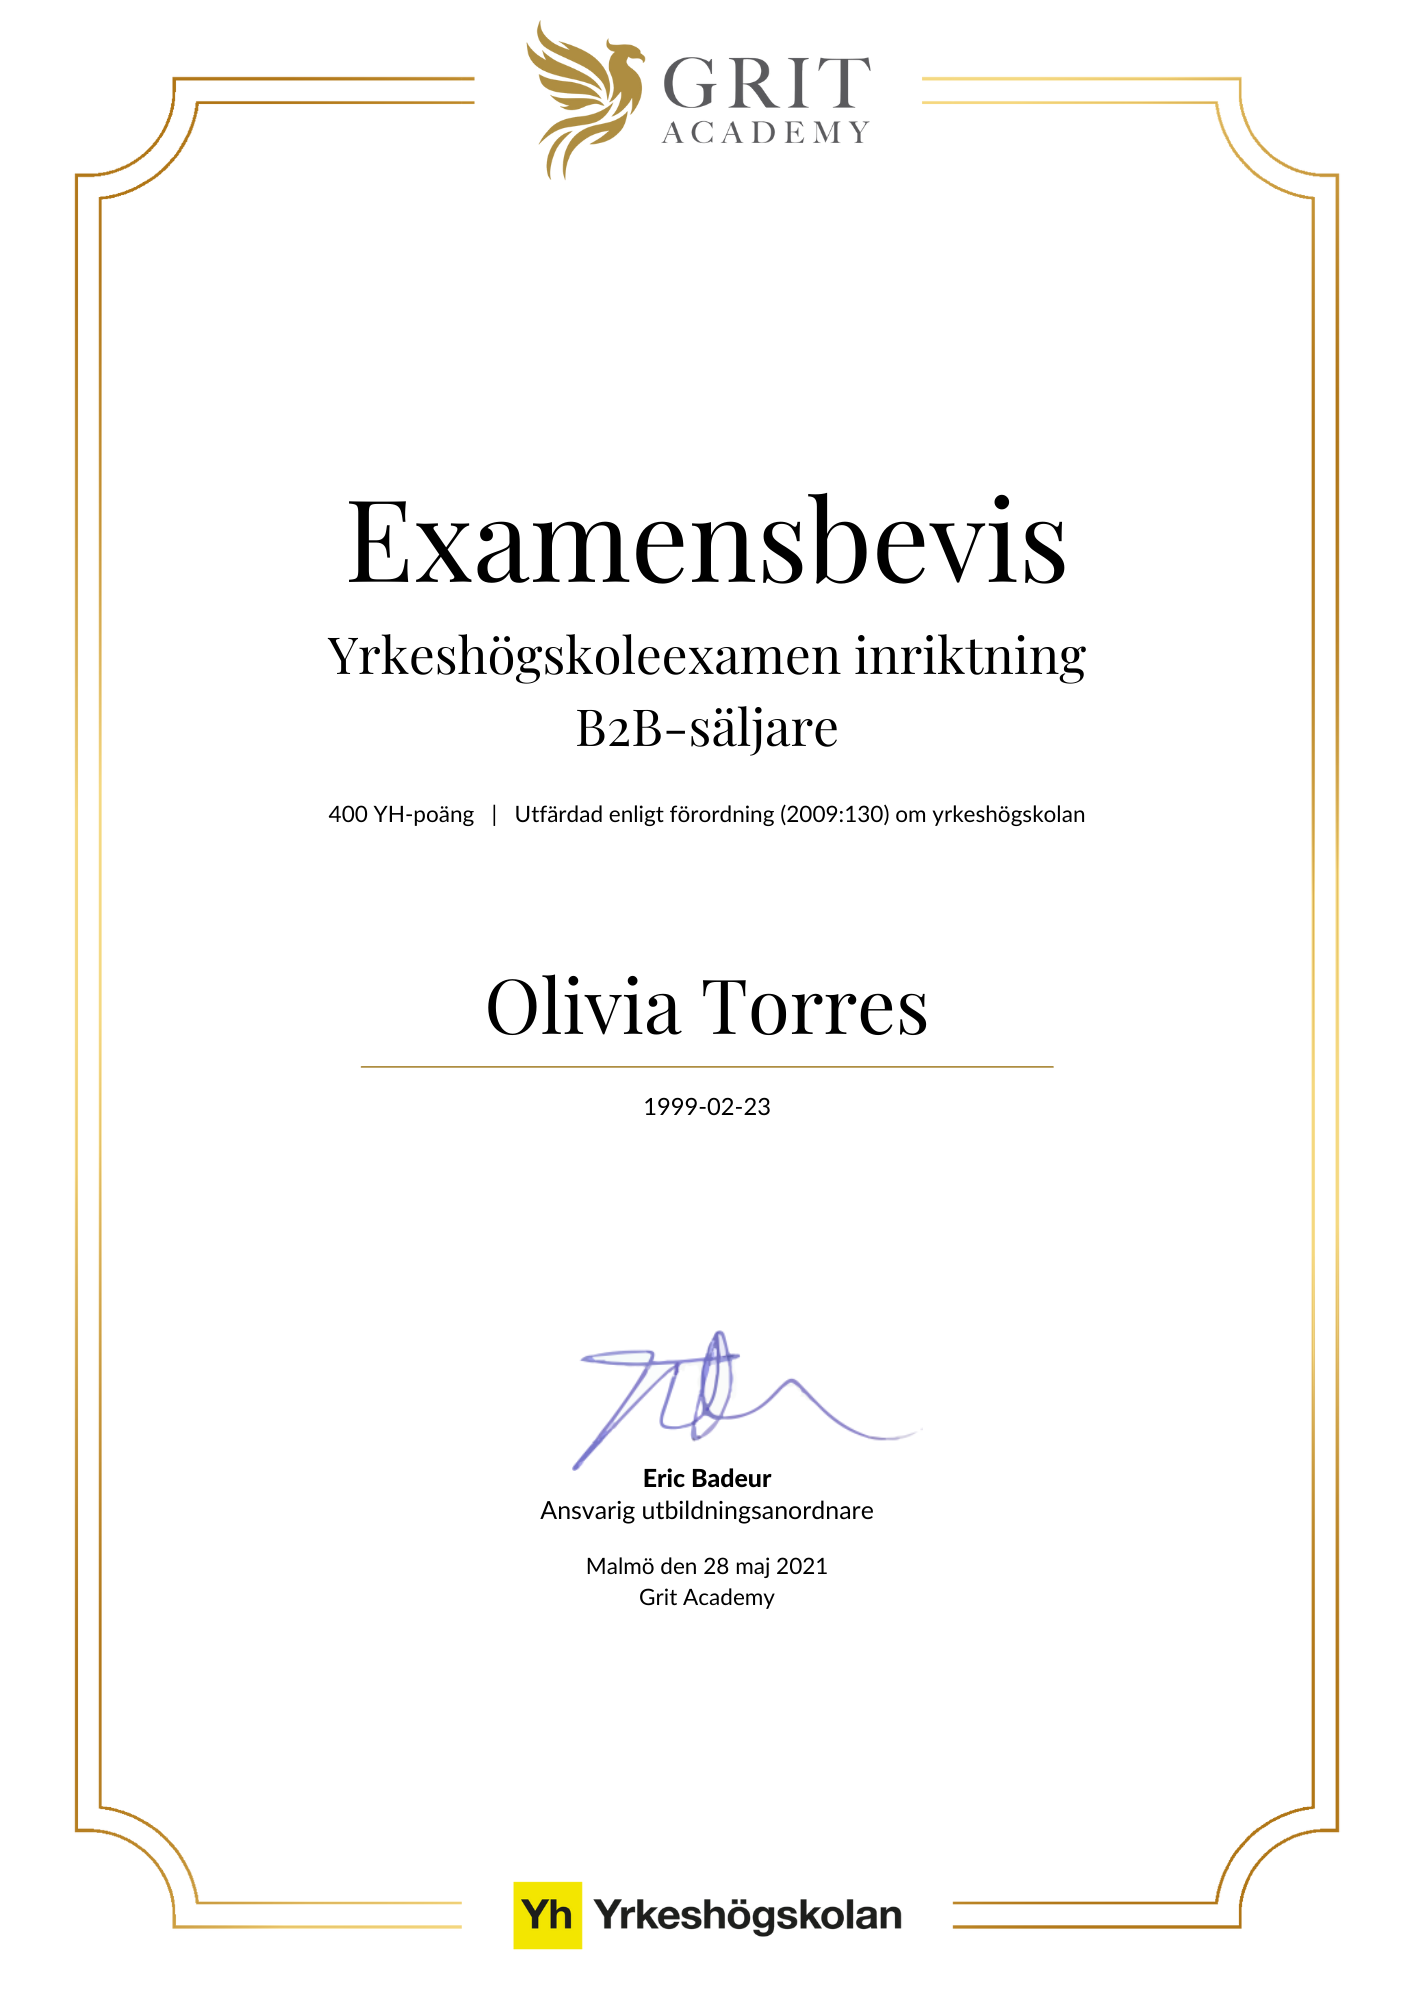 Examensbevis Olivia Torres - 1